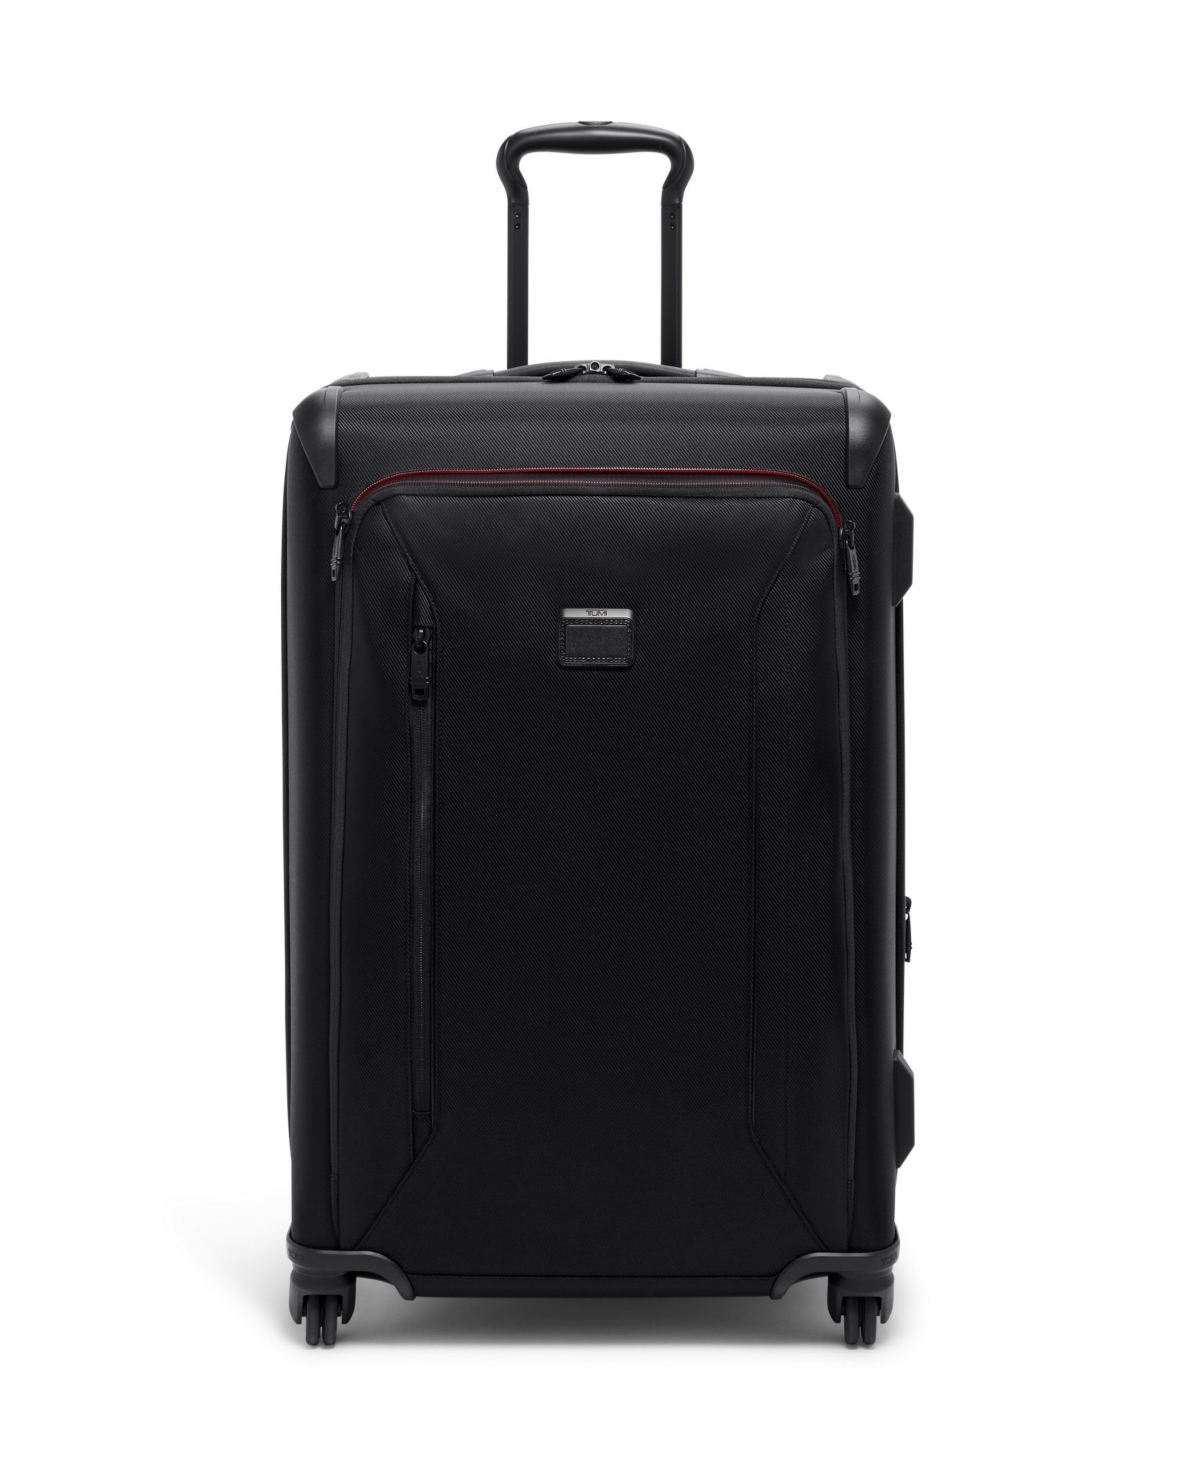 Aerotour Short Trip Expandable 4 Wheeled Packing Case - Black